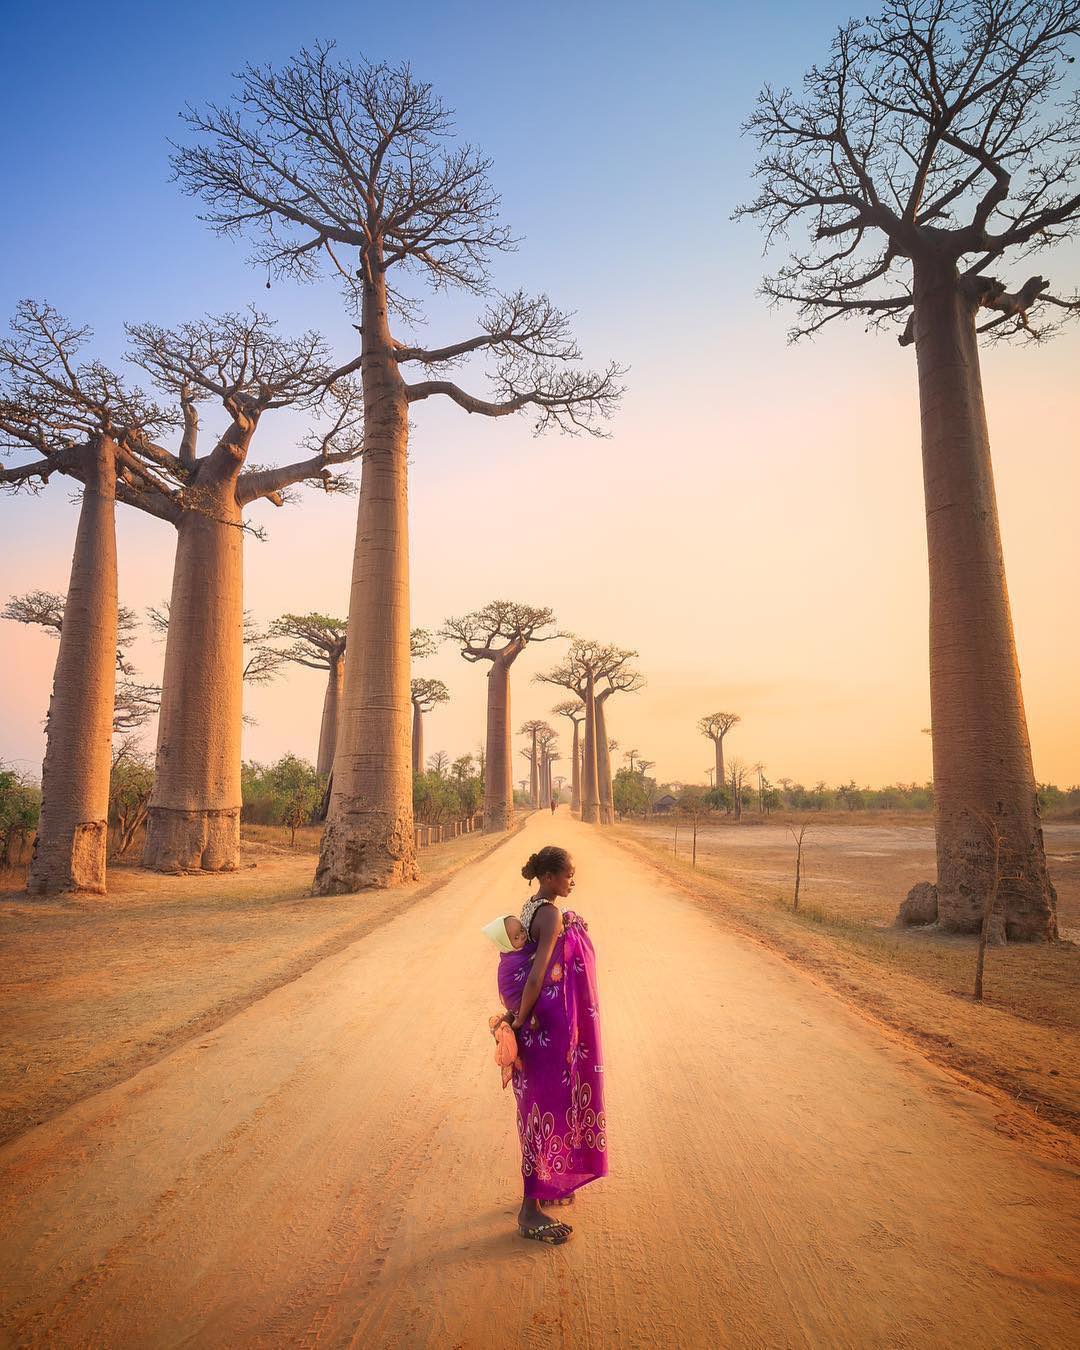 pohon baobab